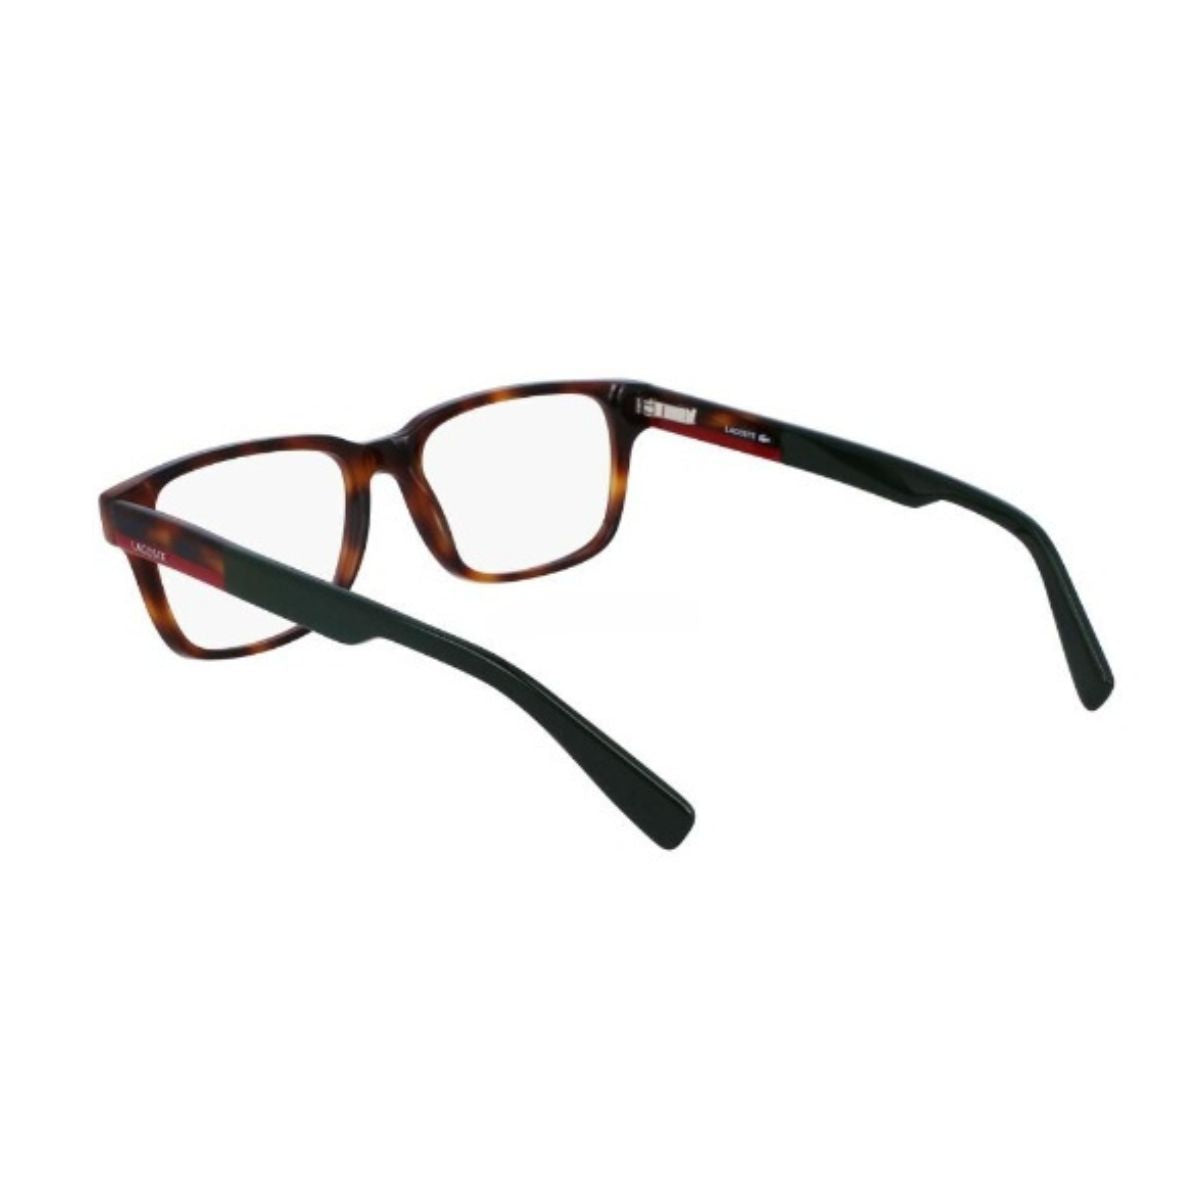 "best Lacoste 2910 240 online eyeglasses frame for men and women at optorium"